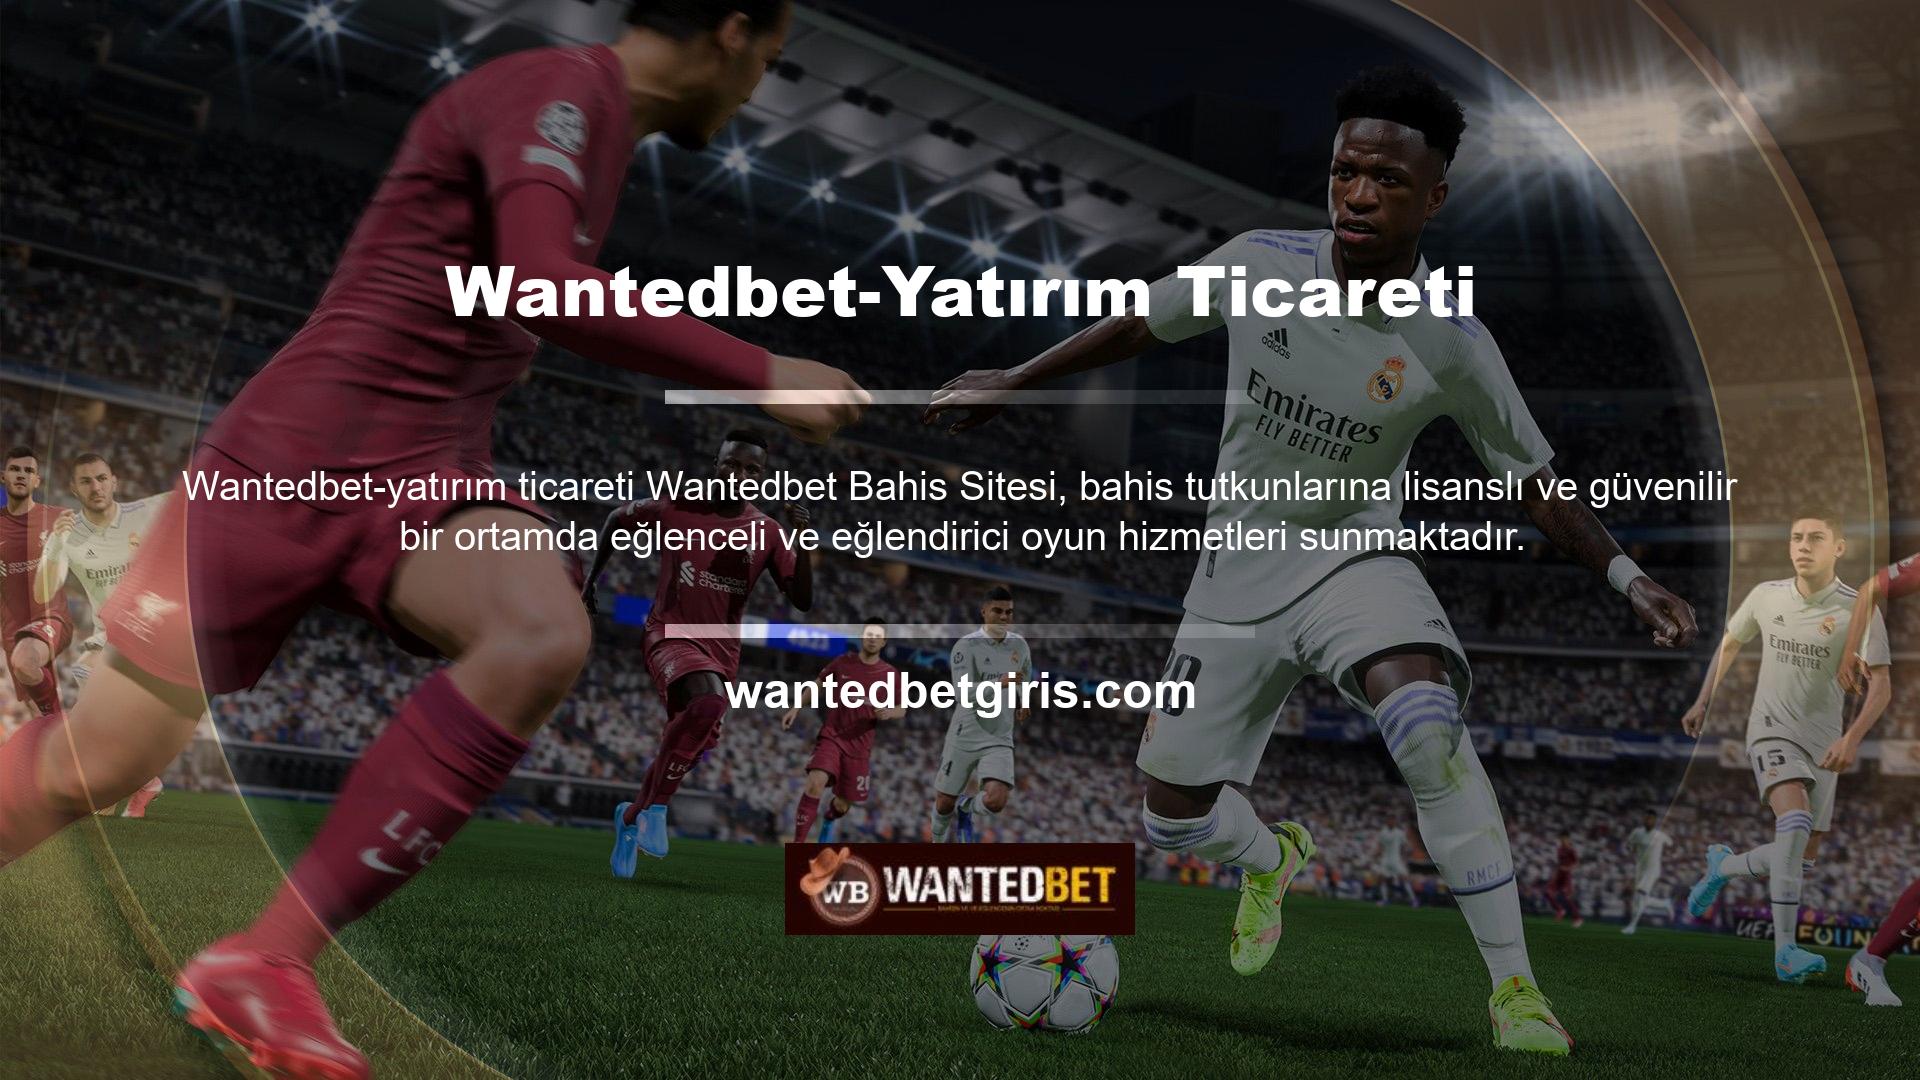 Wantedbet bahis sitesi gerekli lisansa sahiptir